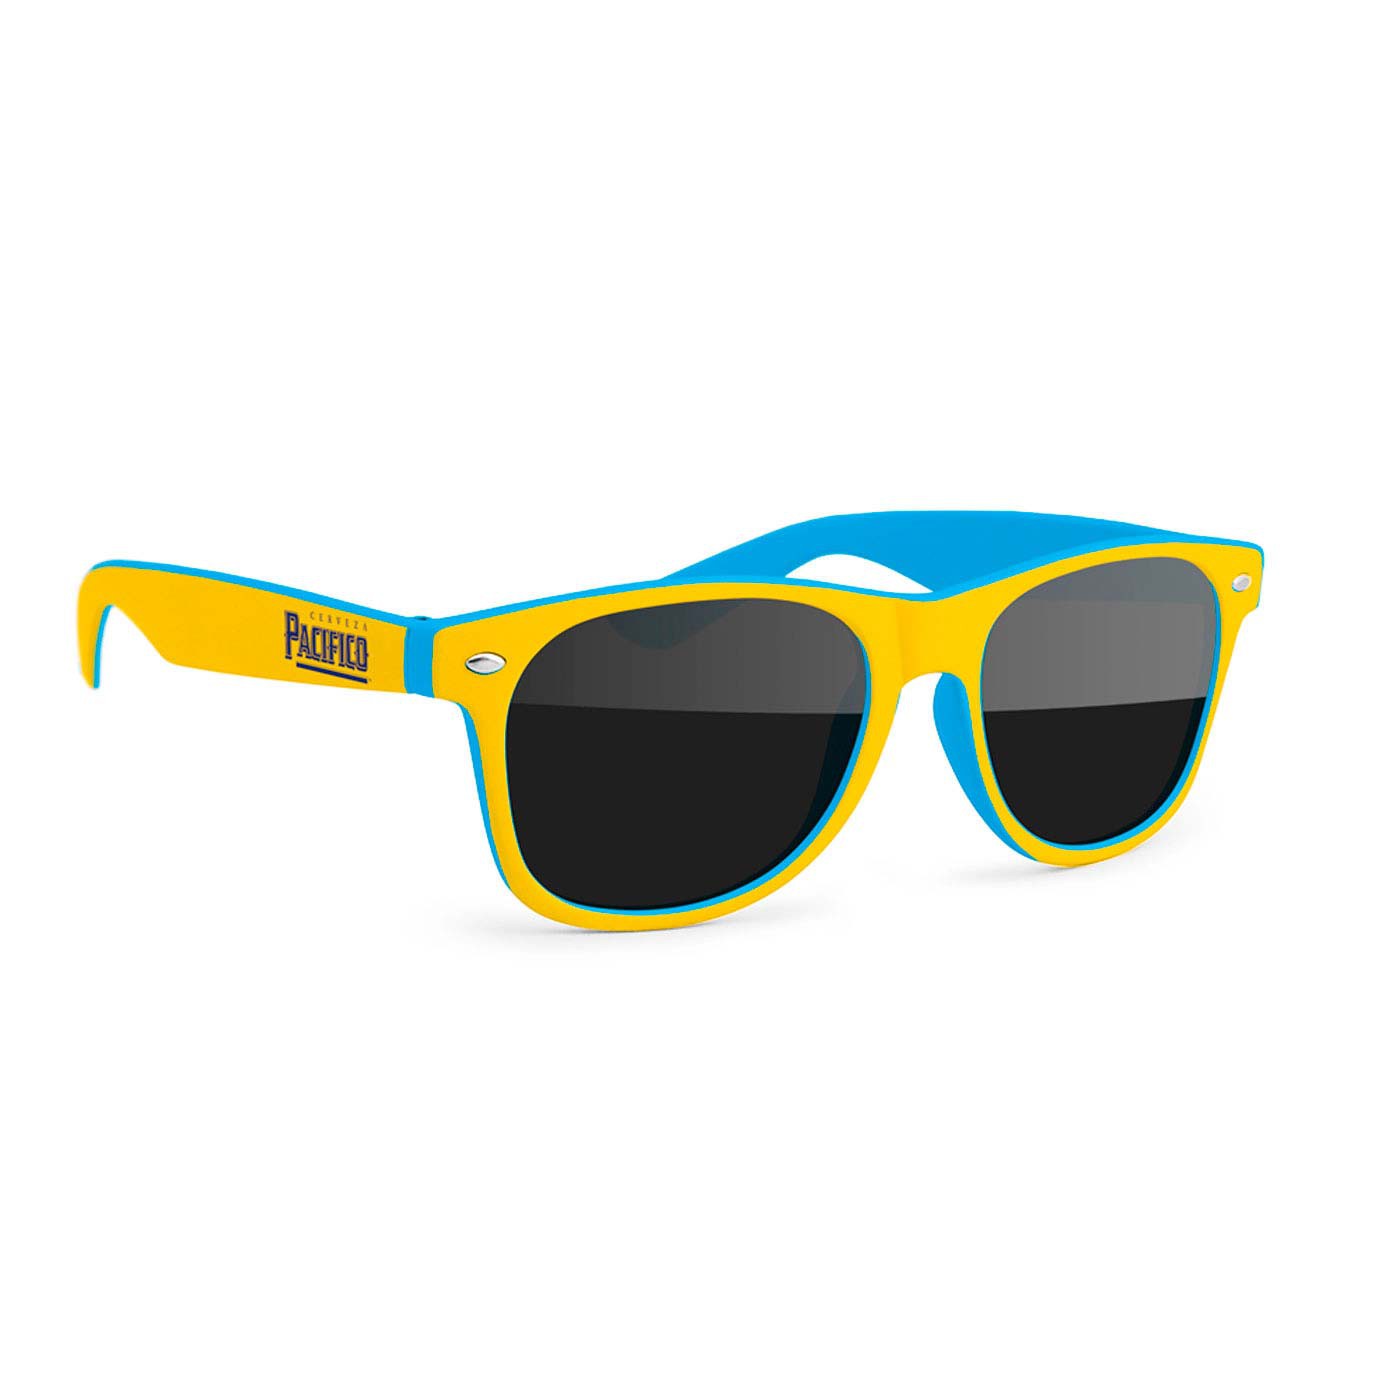 Pacifico Two-Tone Wayfarer Sunglasses